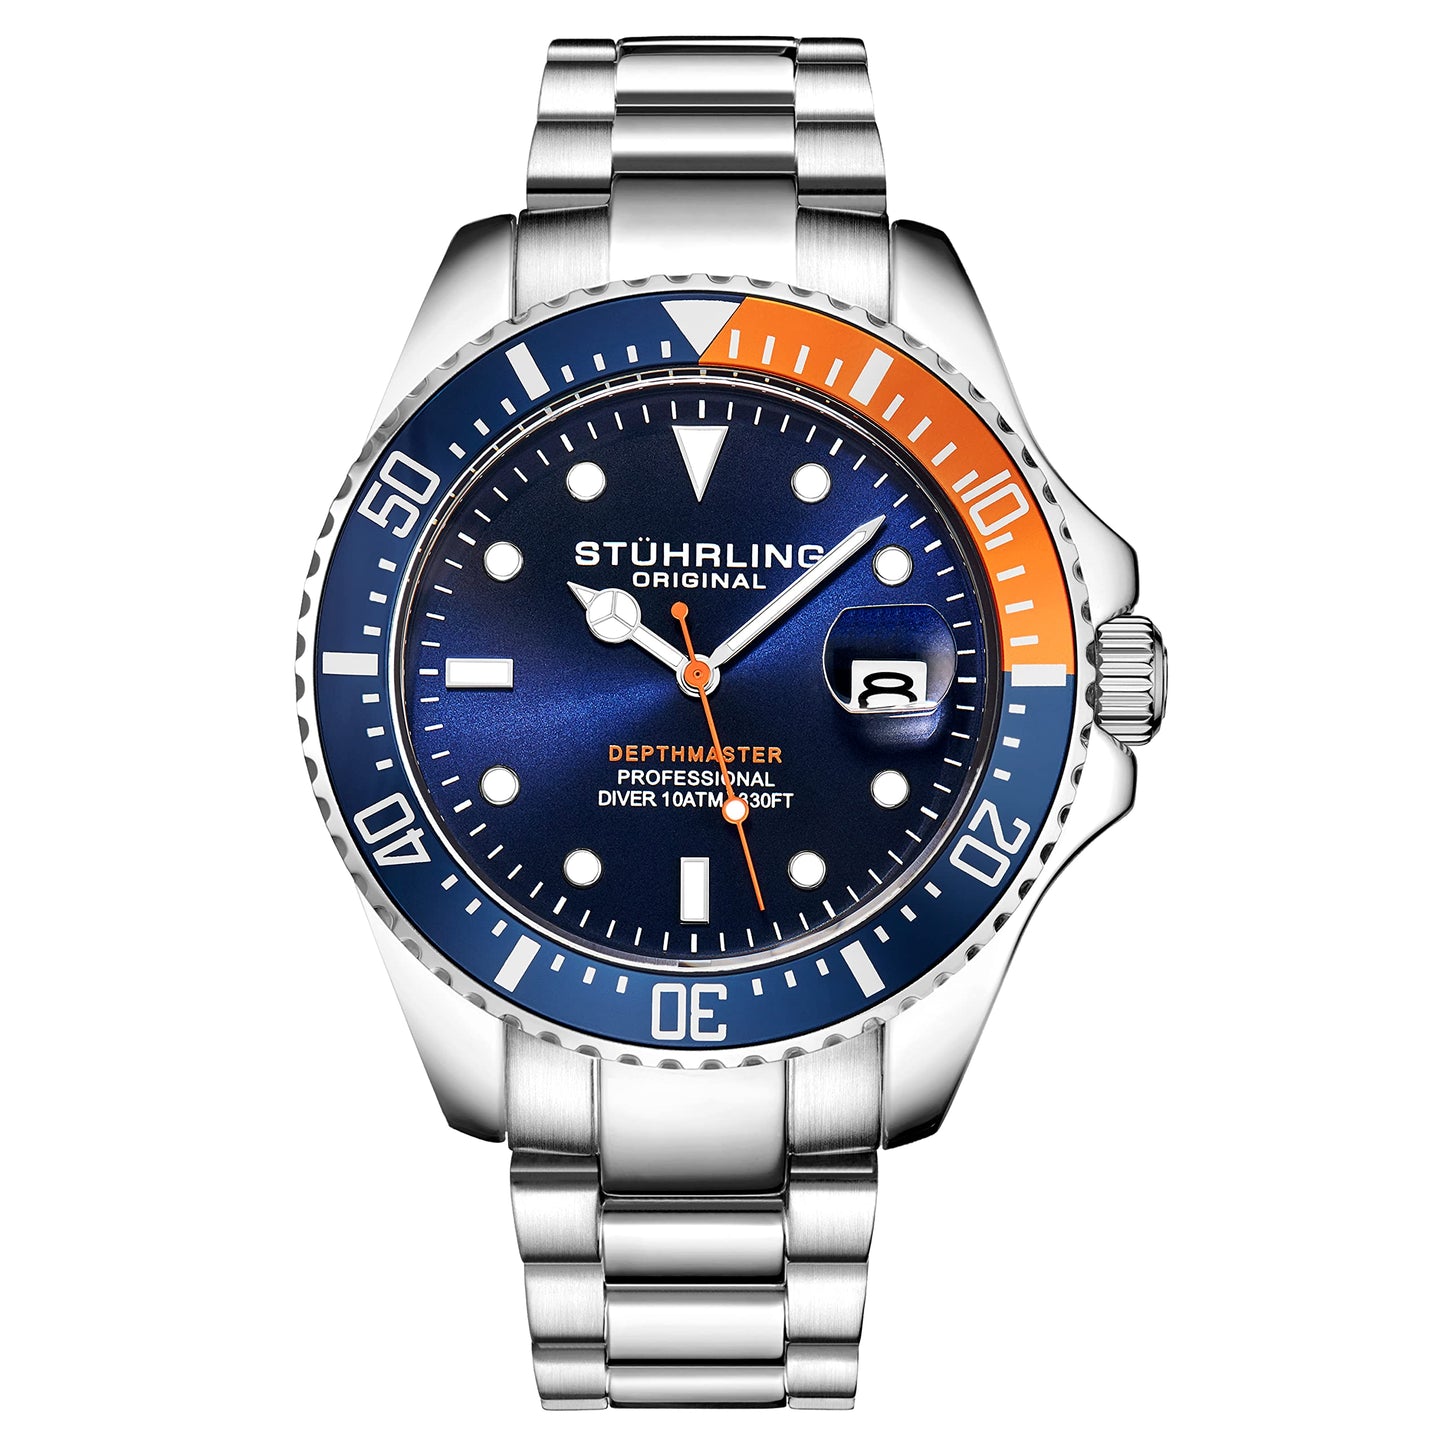 Stuhrling Original Men's Watches Pro Dive Watch Sports Watch with 42 MM Case Blue Dial Stainless Steel Silver Bracelet Diving Watch for Men, Blue/Orange, Diver,Quartz Movement